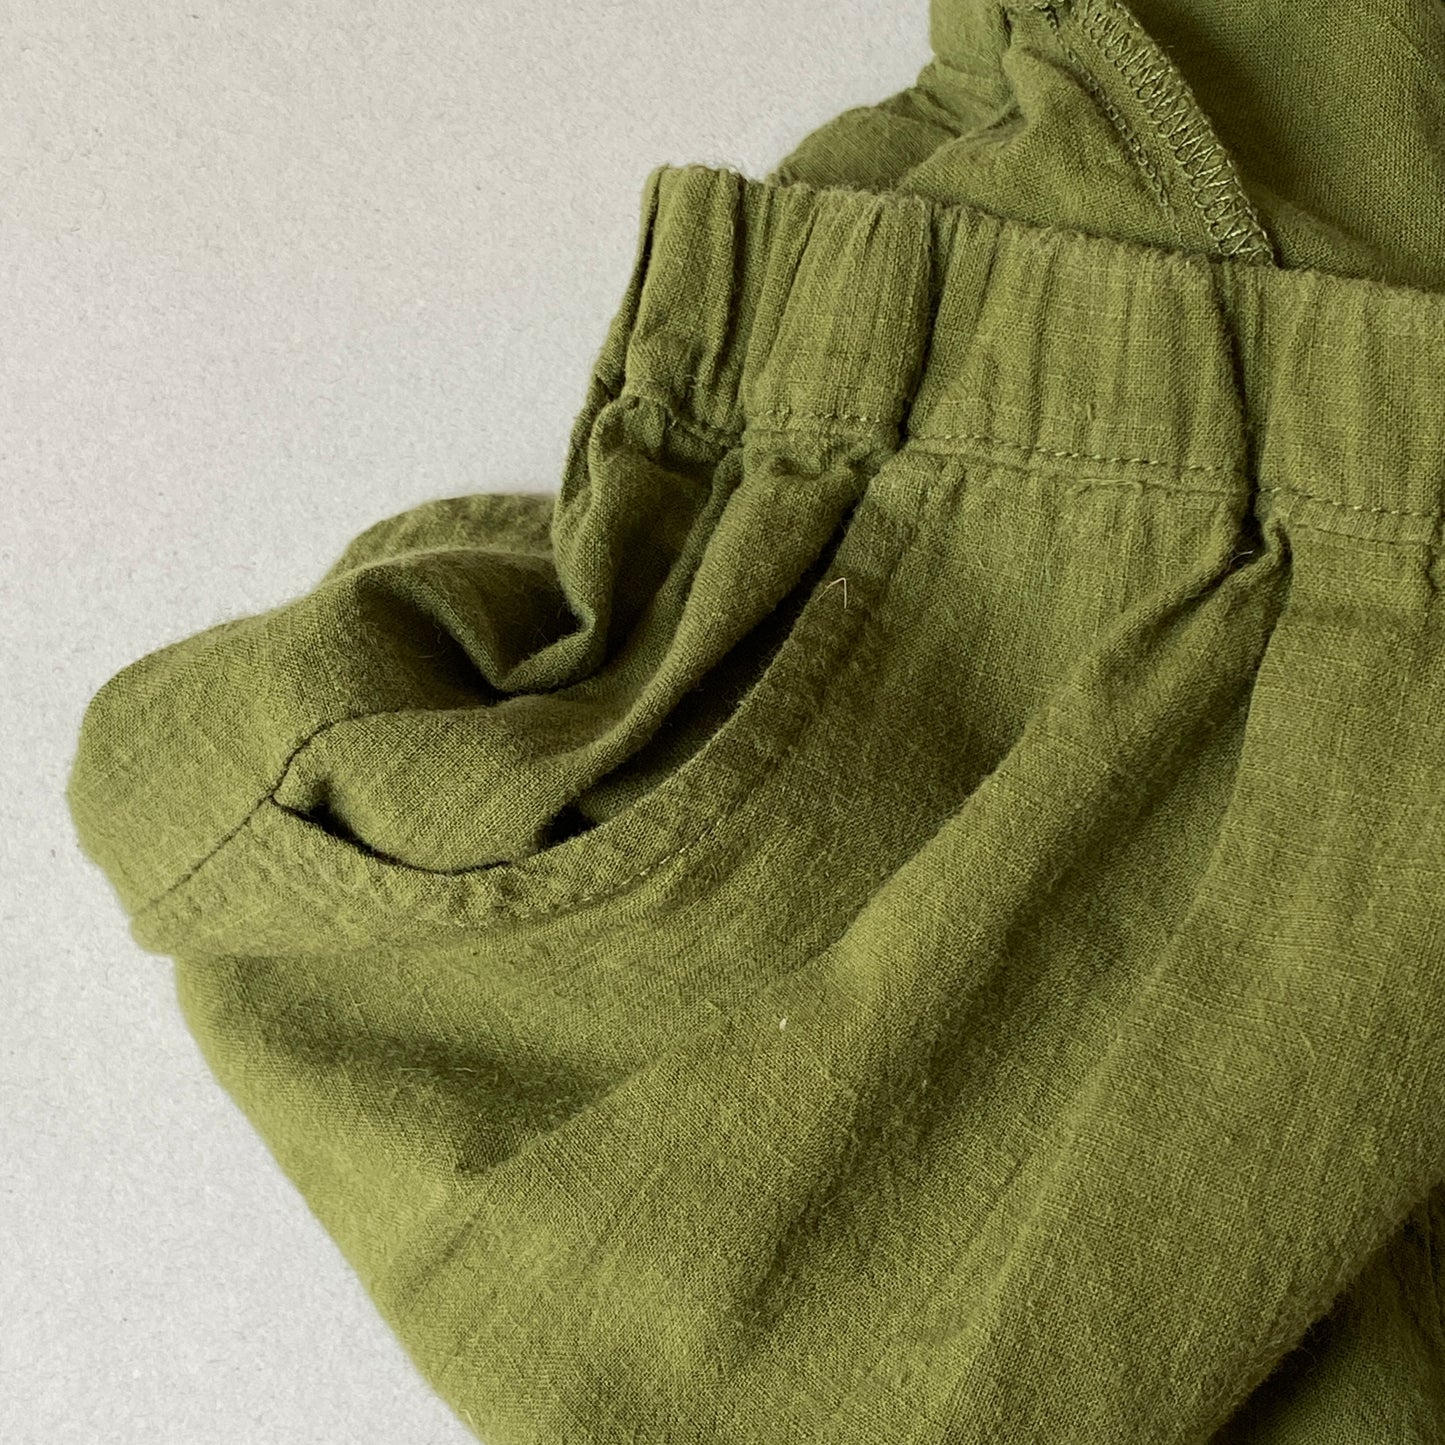 Green Scalloped Shorts (12/18M)